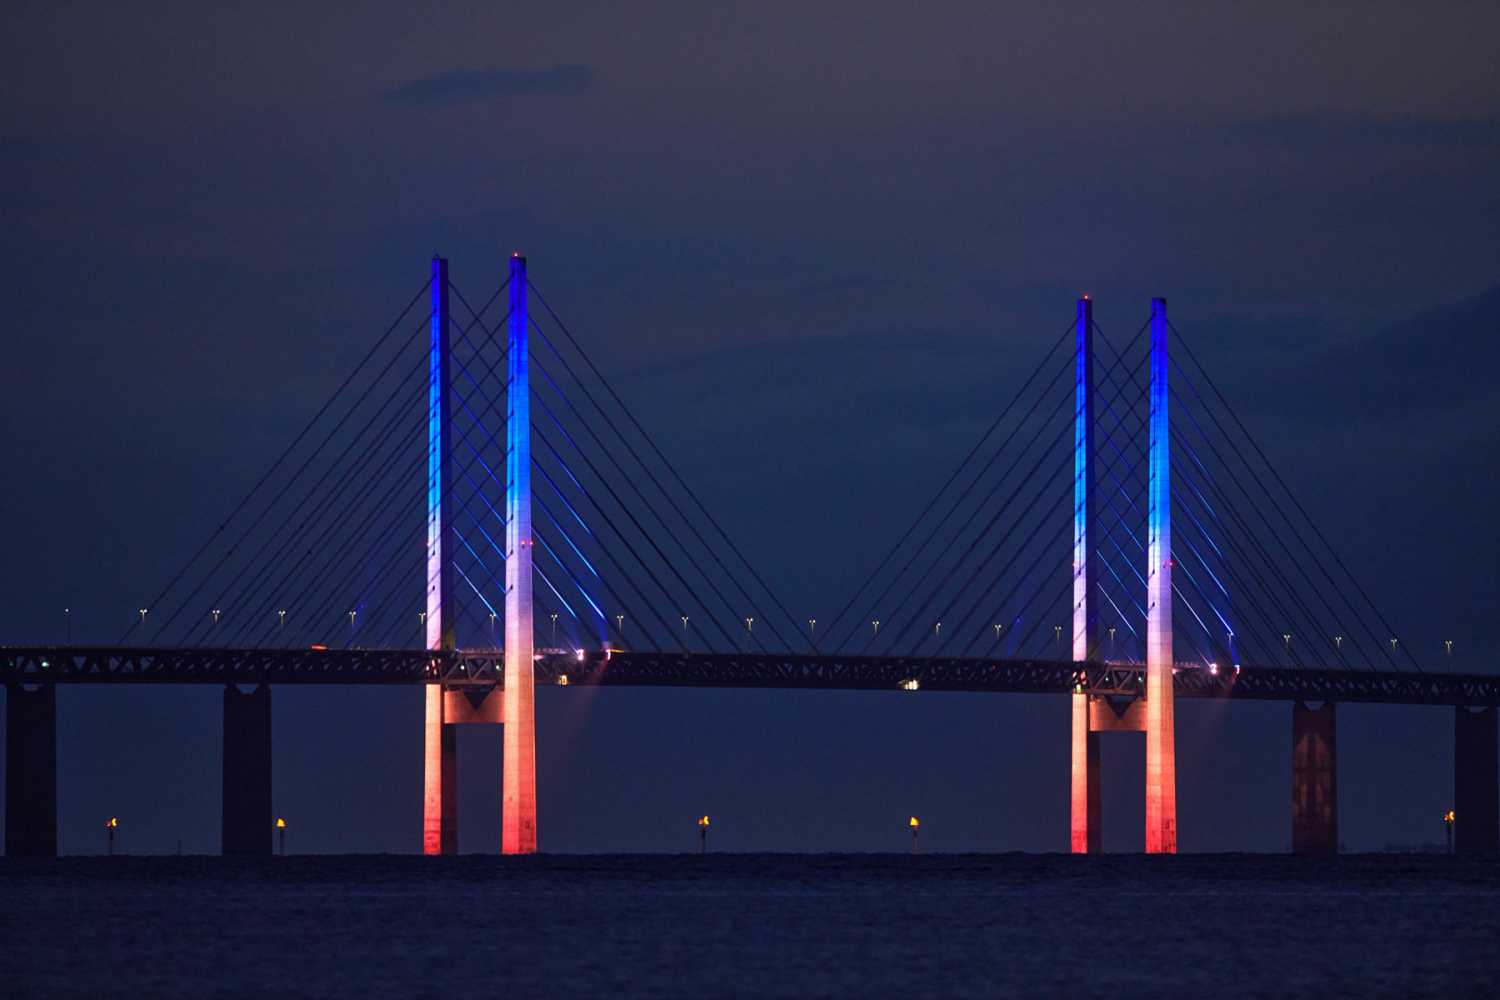 The Øresund Bridge is the longest combined road and rail bridge in Europe